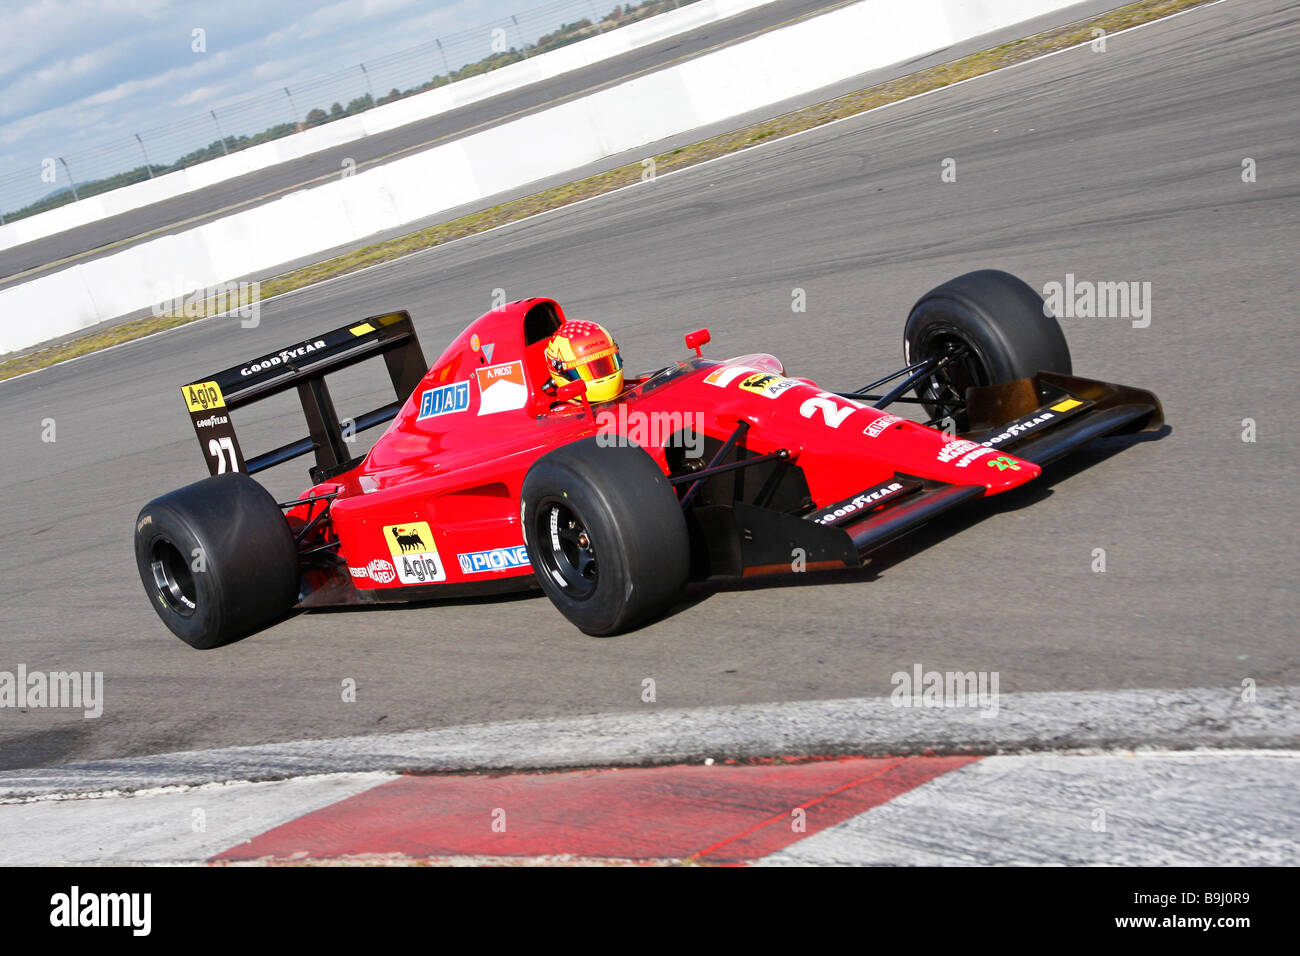 Ferrari Formel 1 F191, ex Jean Alesi, model 1991, Ferrari Days 2008, Nuerburgring, Rhineland-Palatinate, Germany, Europe Stock Photo